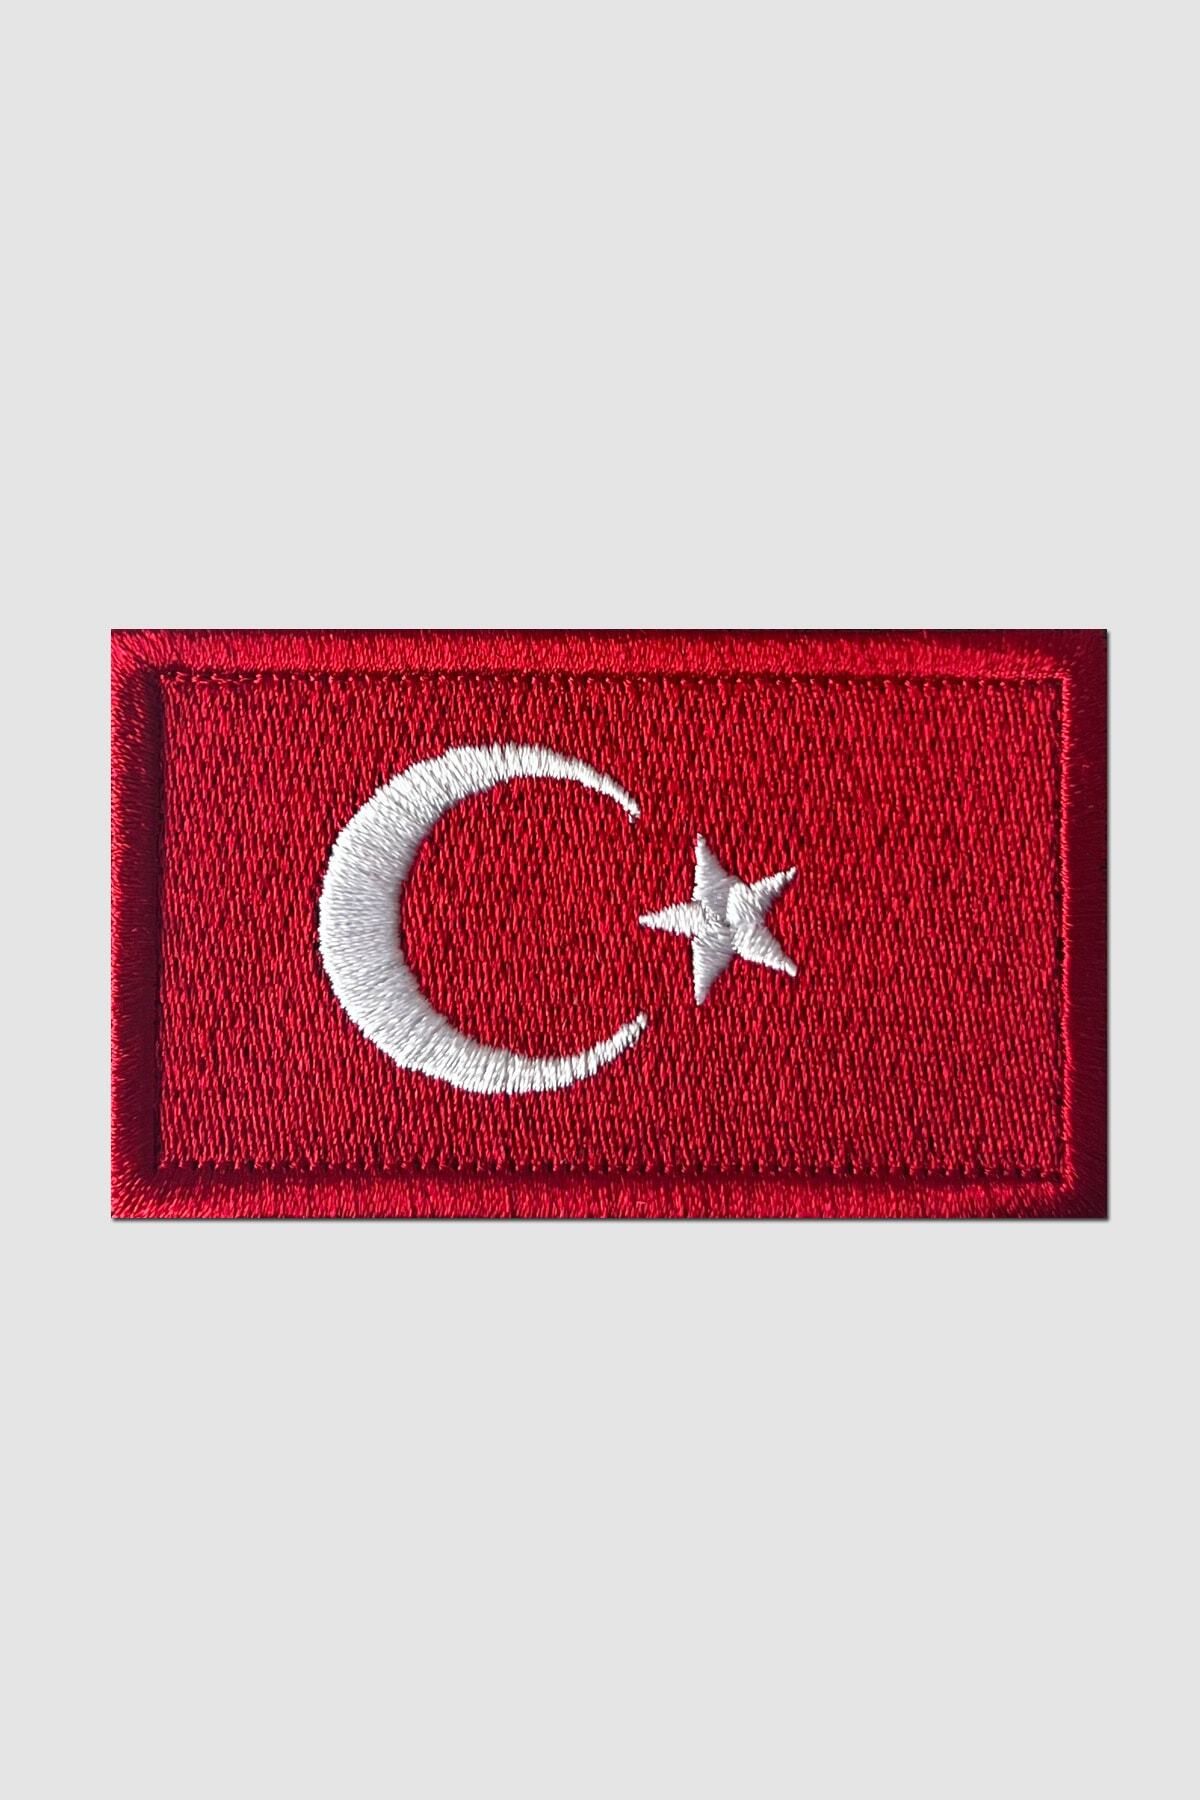 PEÇ Ay-yıldız Türk Bayrağı Cırtlı Nakışlı Arma, , Yama, Airsoft